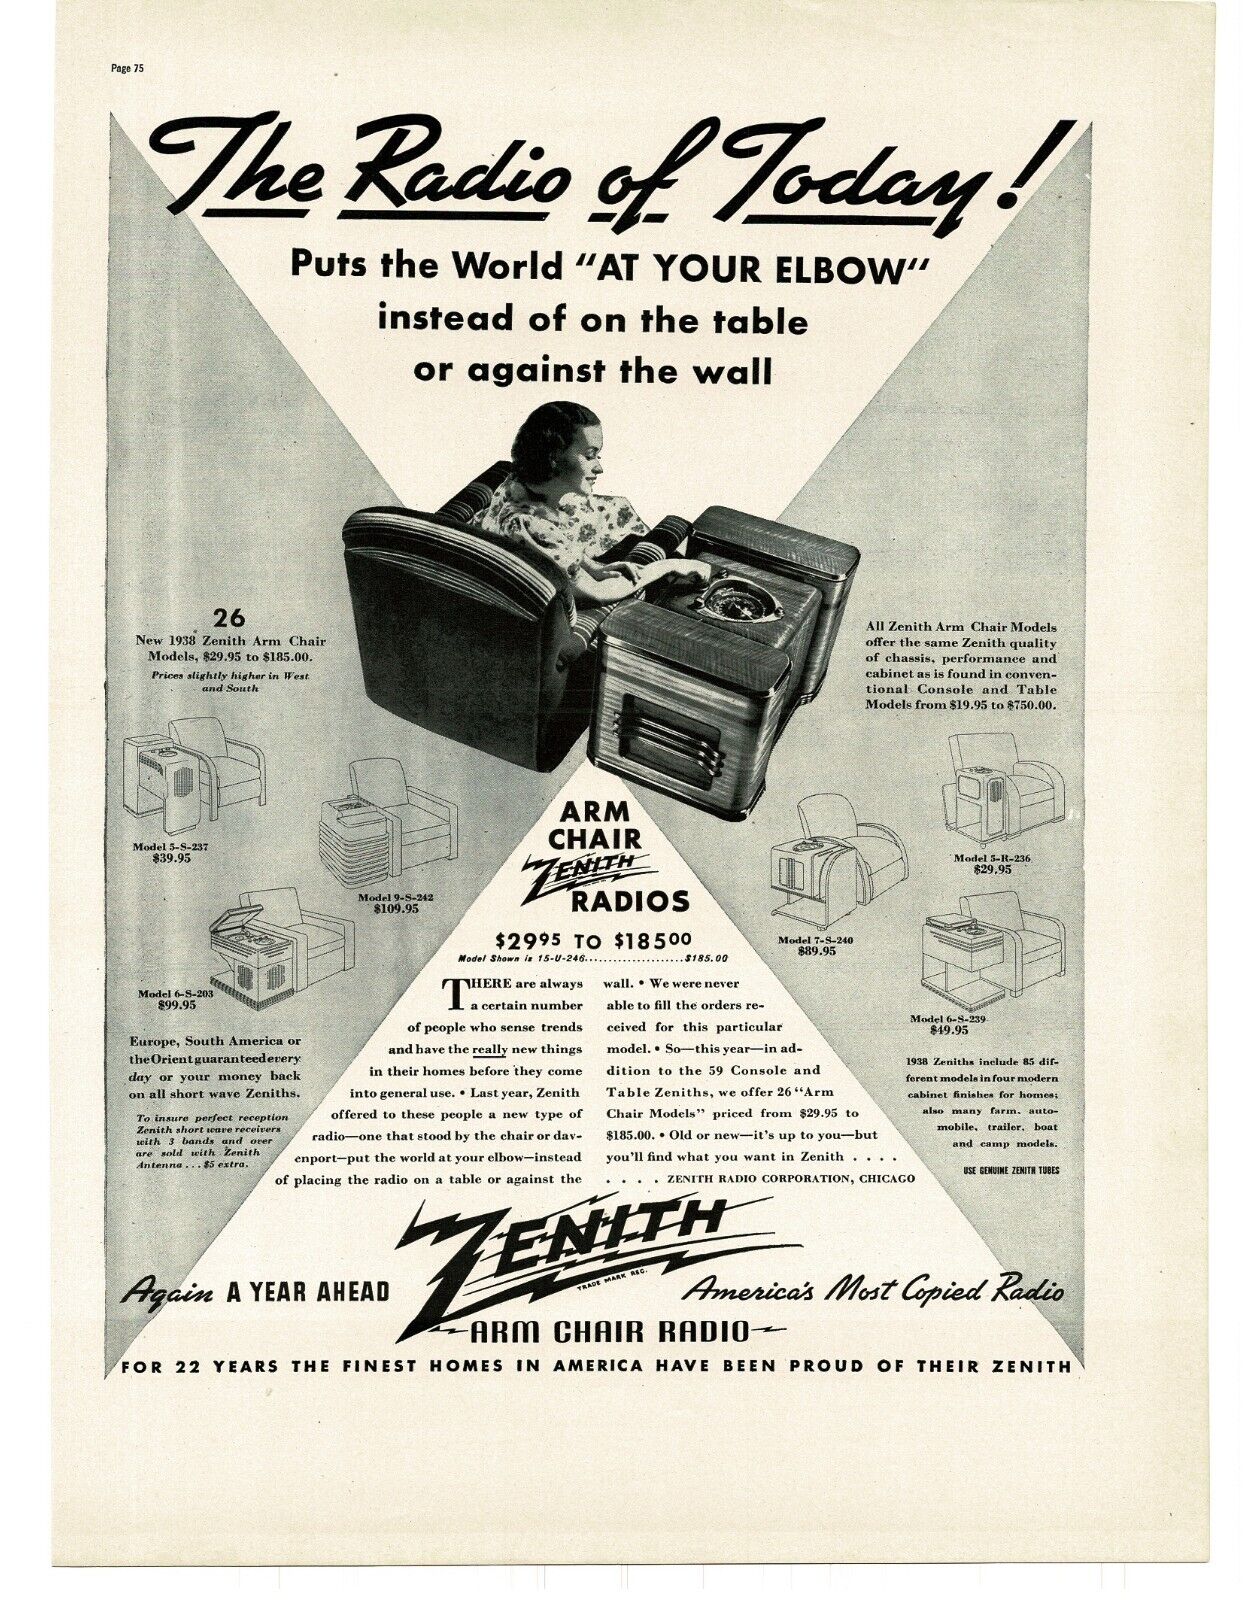 1938 Zenith Arm Chair Radio Model 15-U-246 Vintage Print Ad